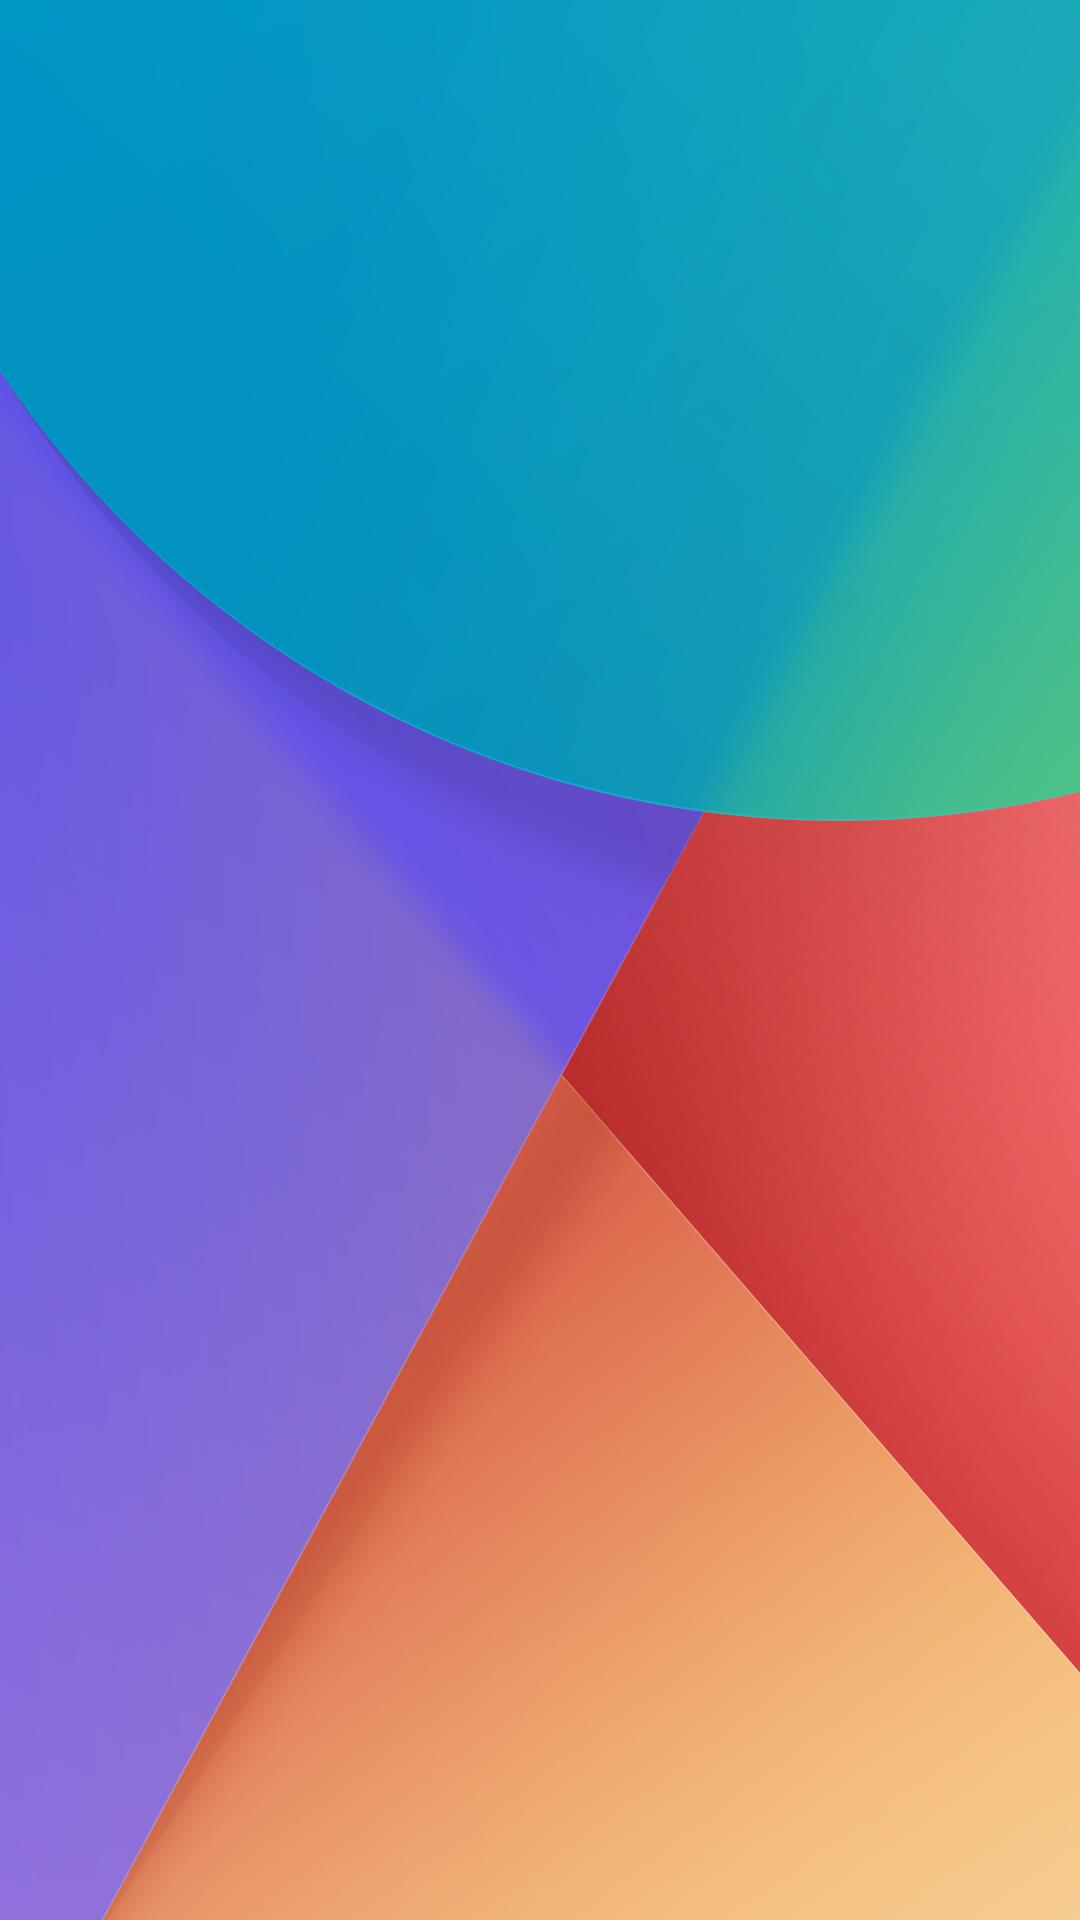 Mi Logo, phone wallpaper, background, lock screen | Обои андроид, Обои для  телефона, Обои фоны